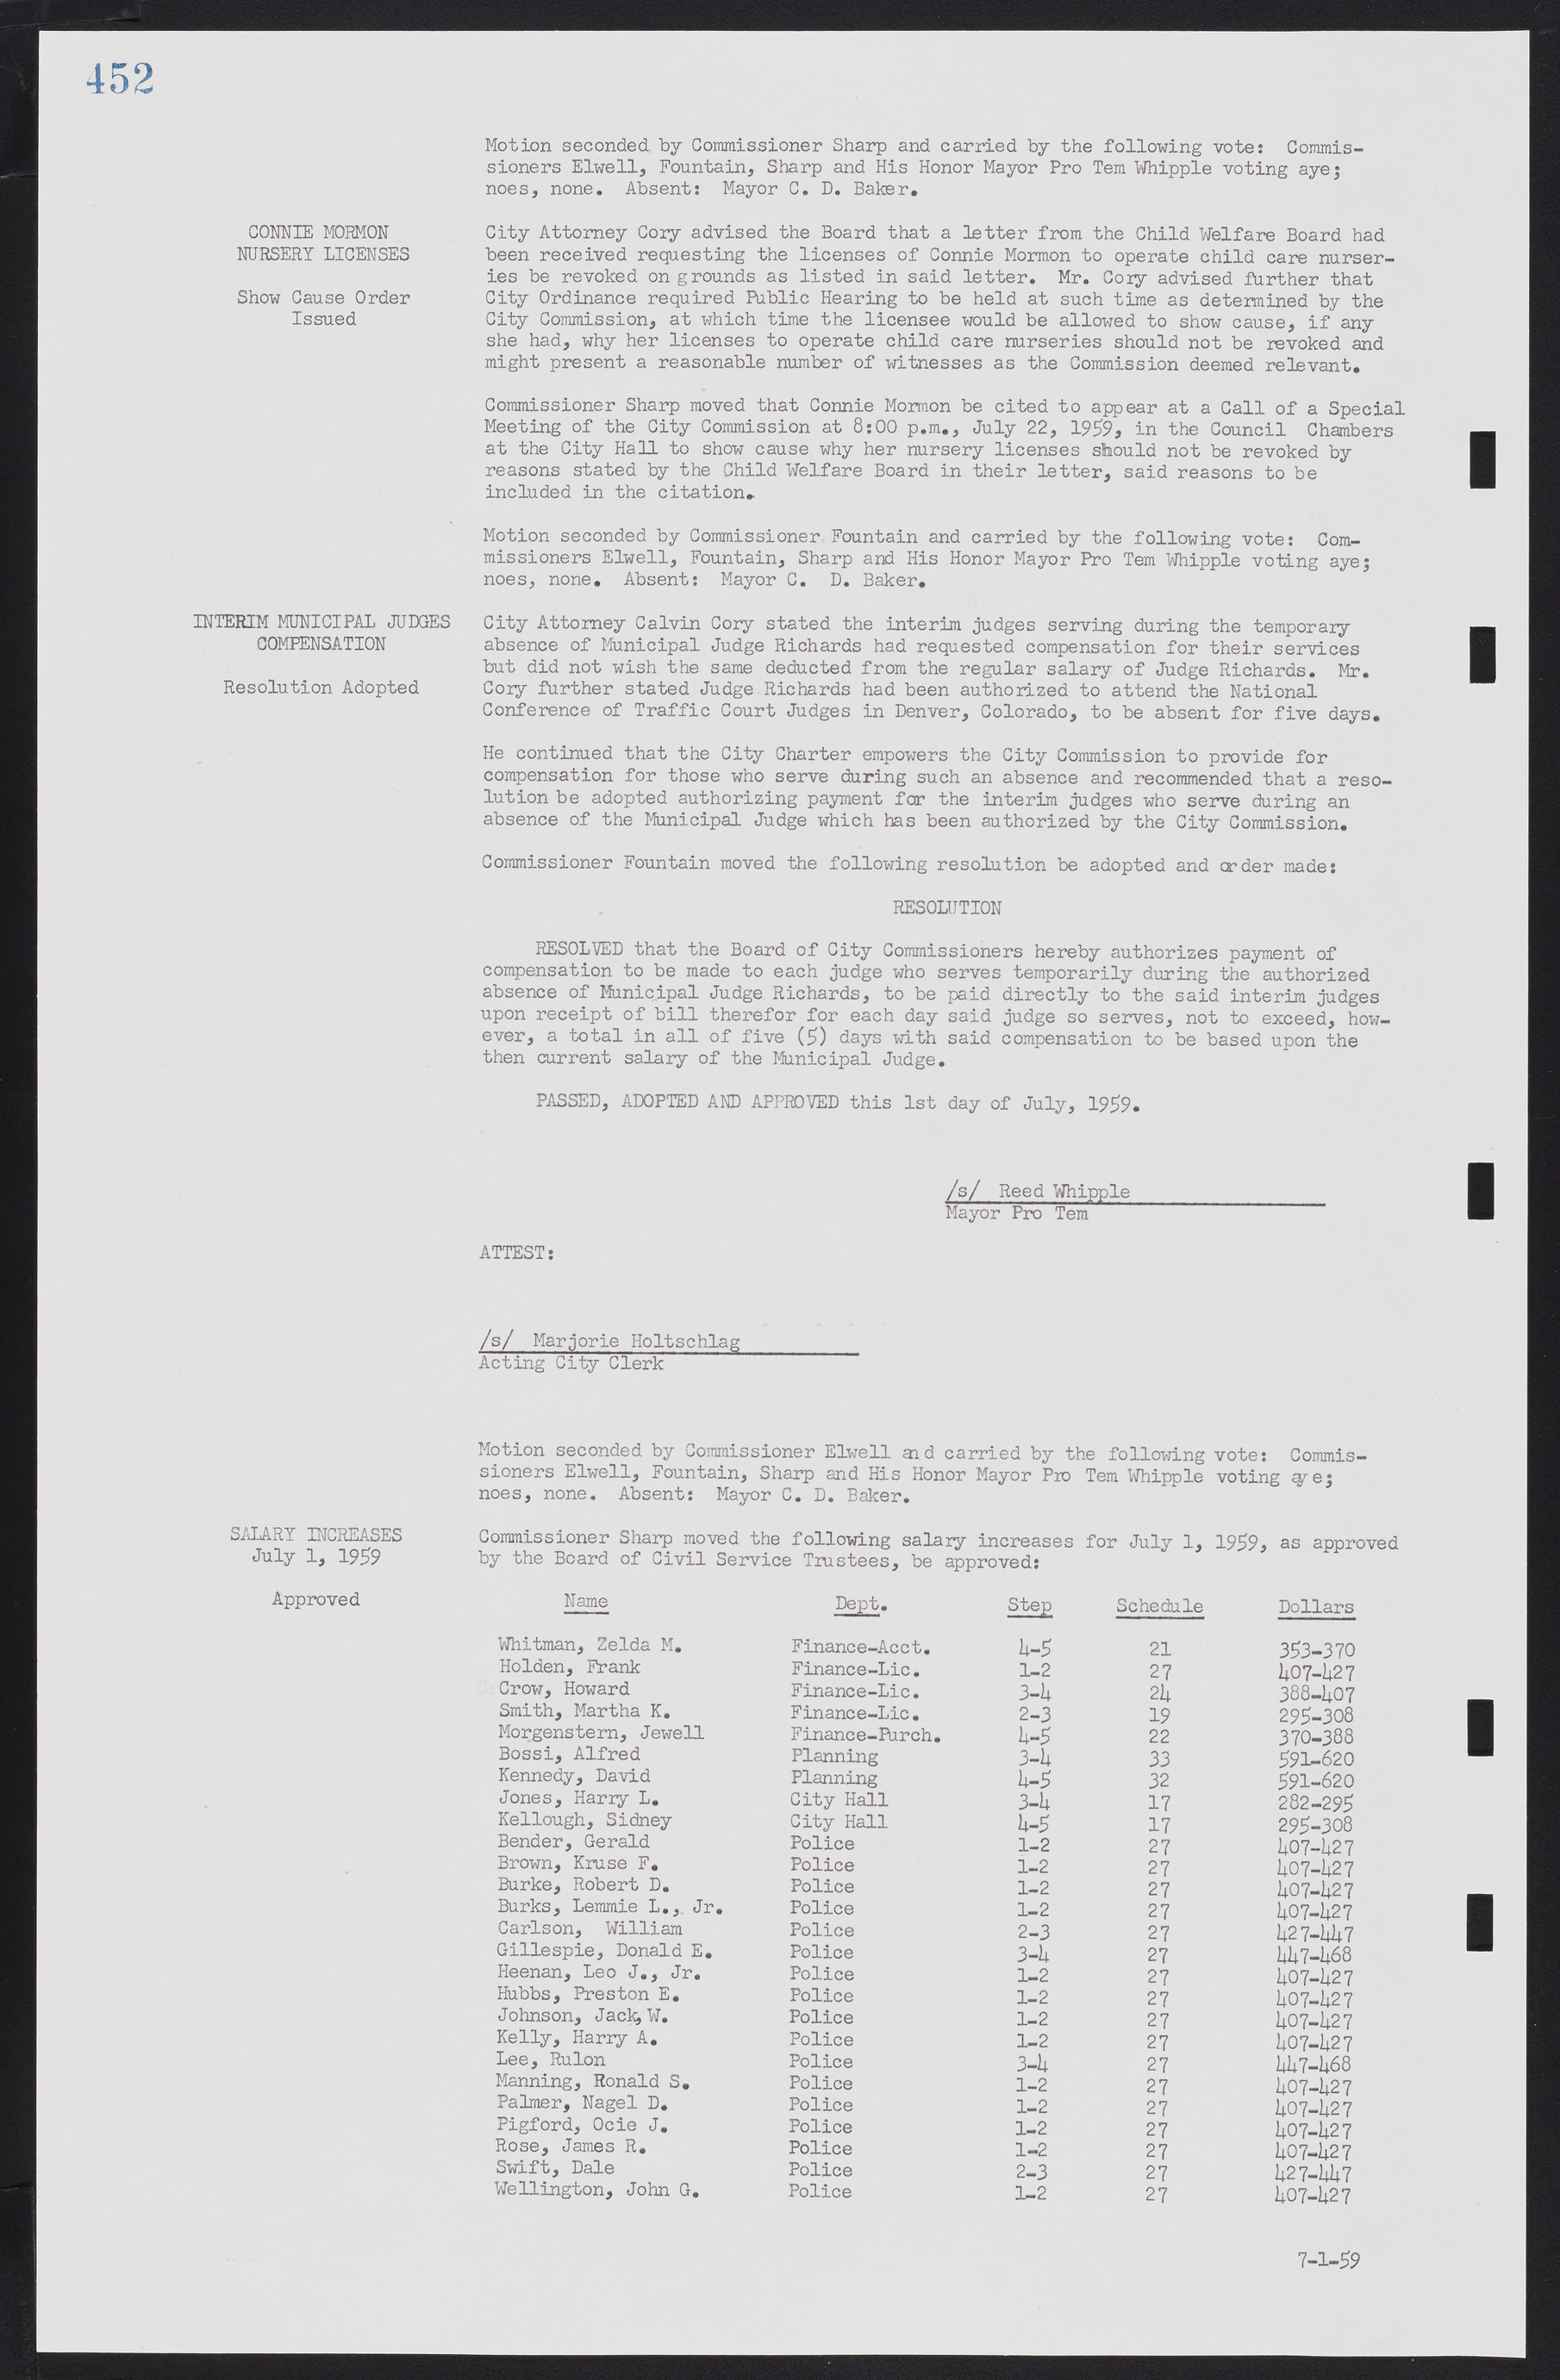 Las Vegas City Commission Minutes, November 20, 1957 to December 2, 1959, lvc000011-488